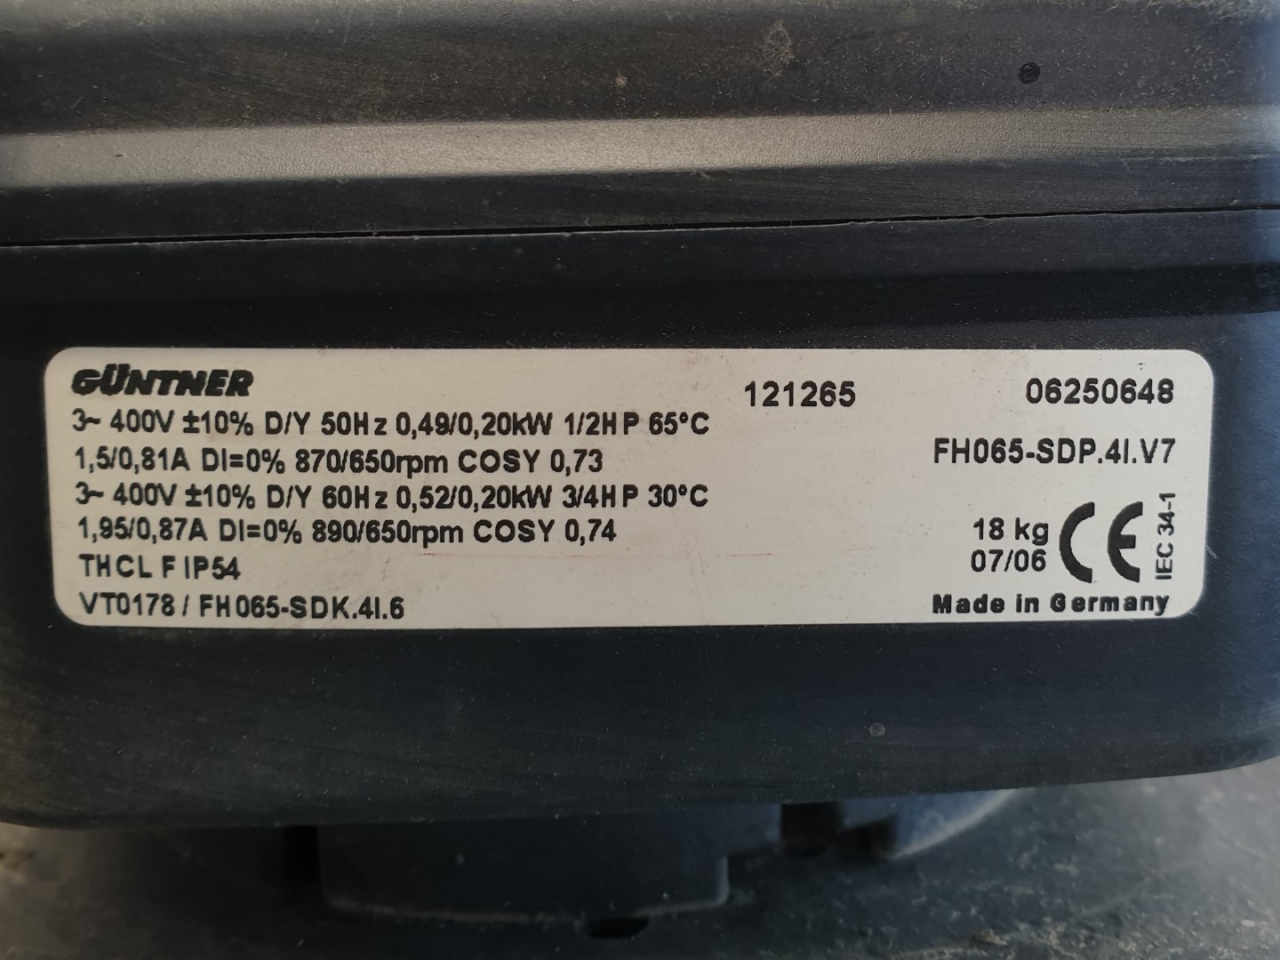 Used Güntner GVV 065.1A/1-L(S).E air cooled condensor - HOS BV